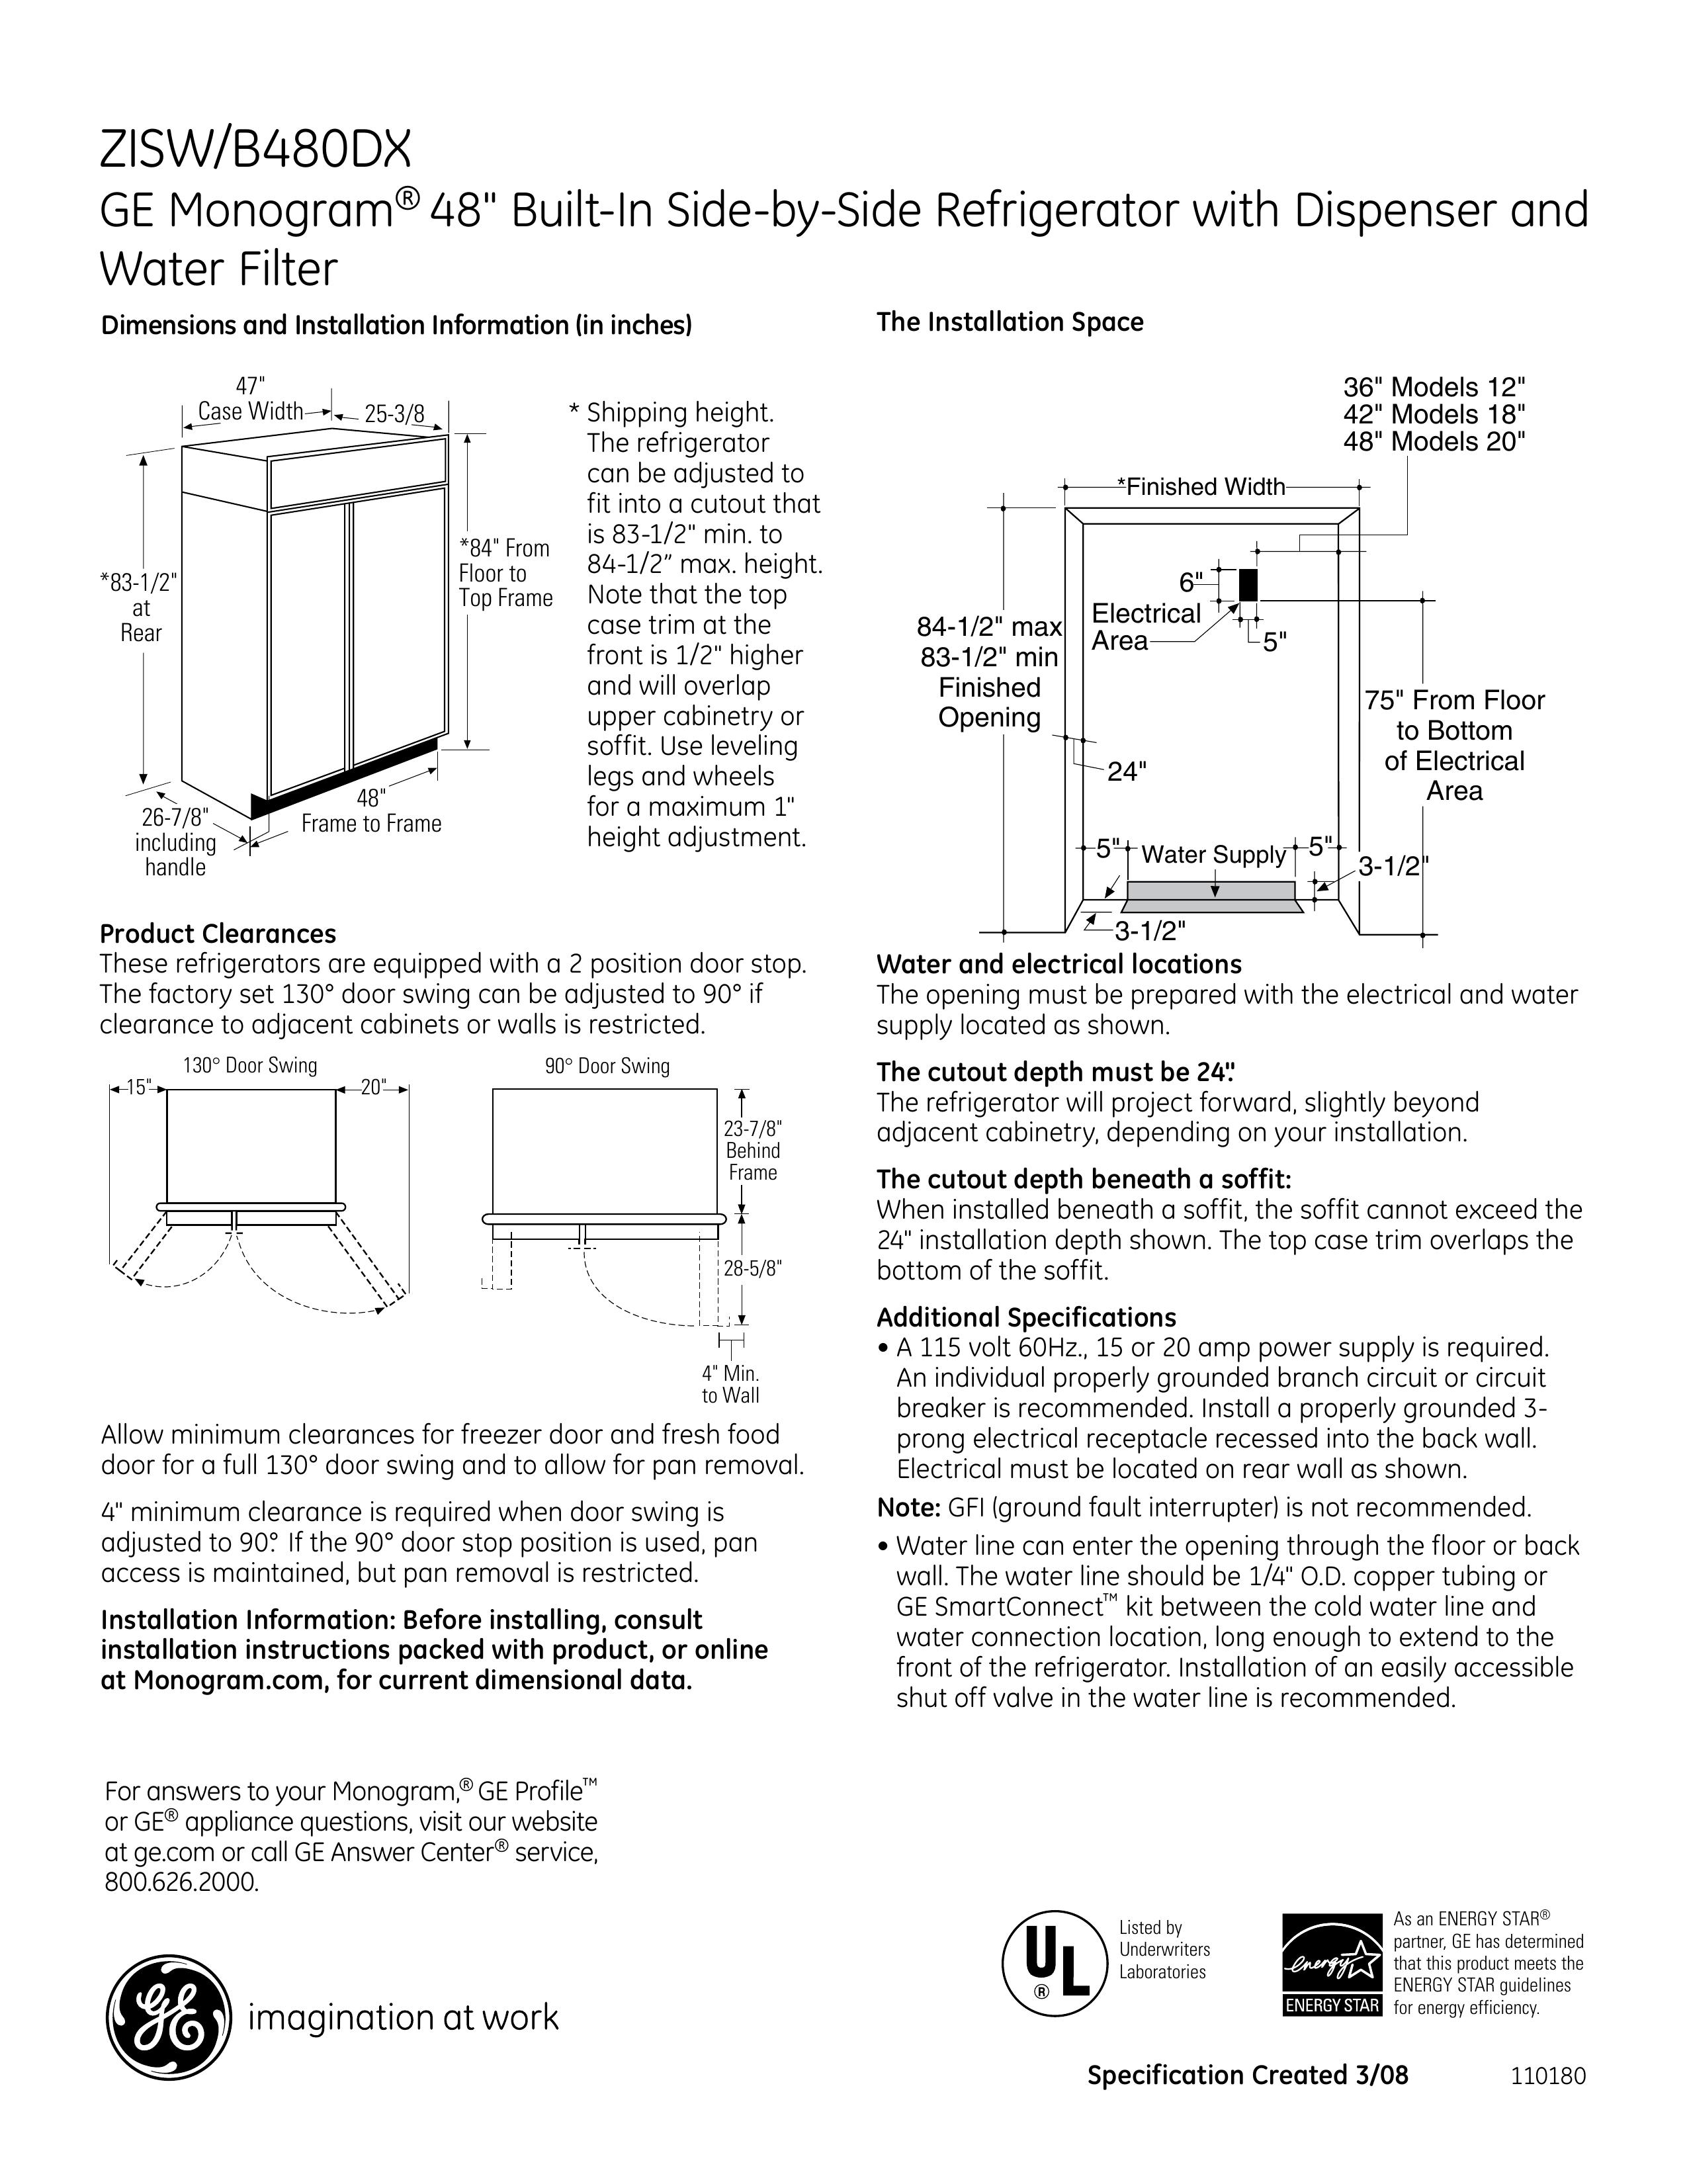 GE Monogram B480DX Refrigerator User Manual